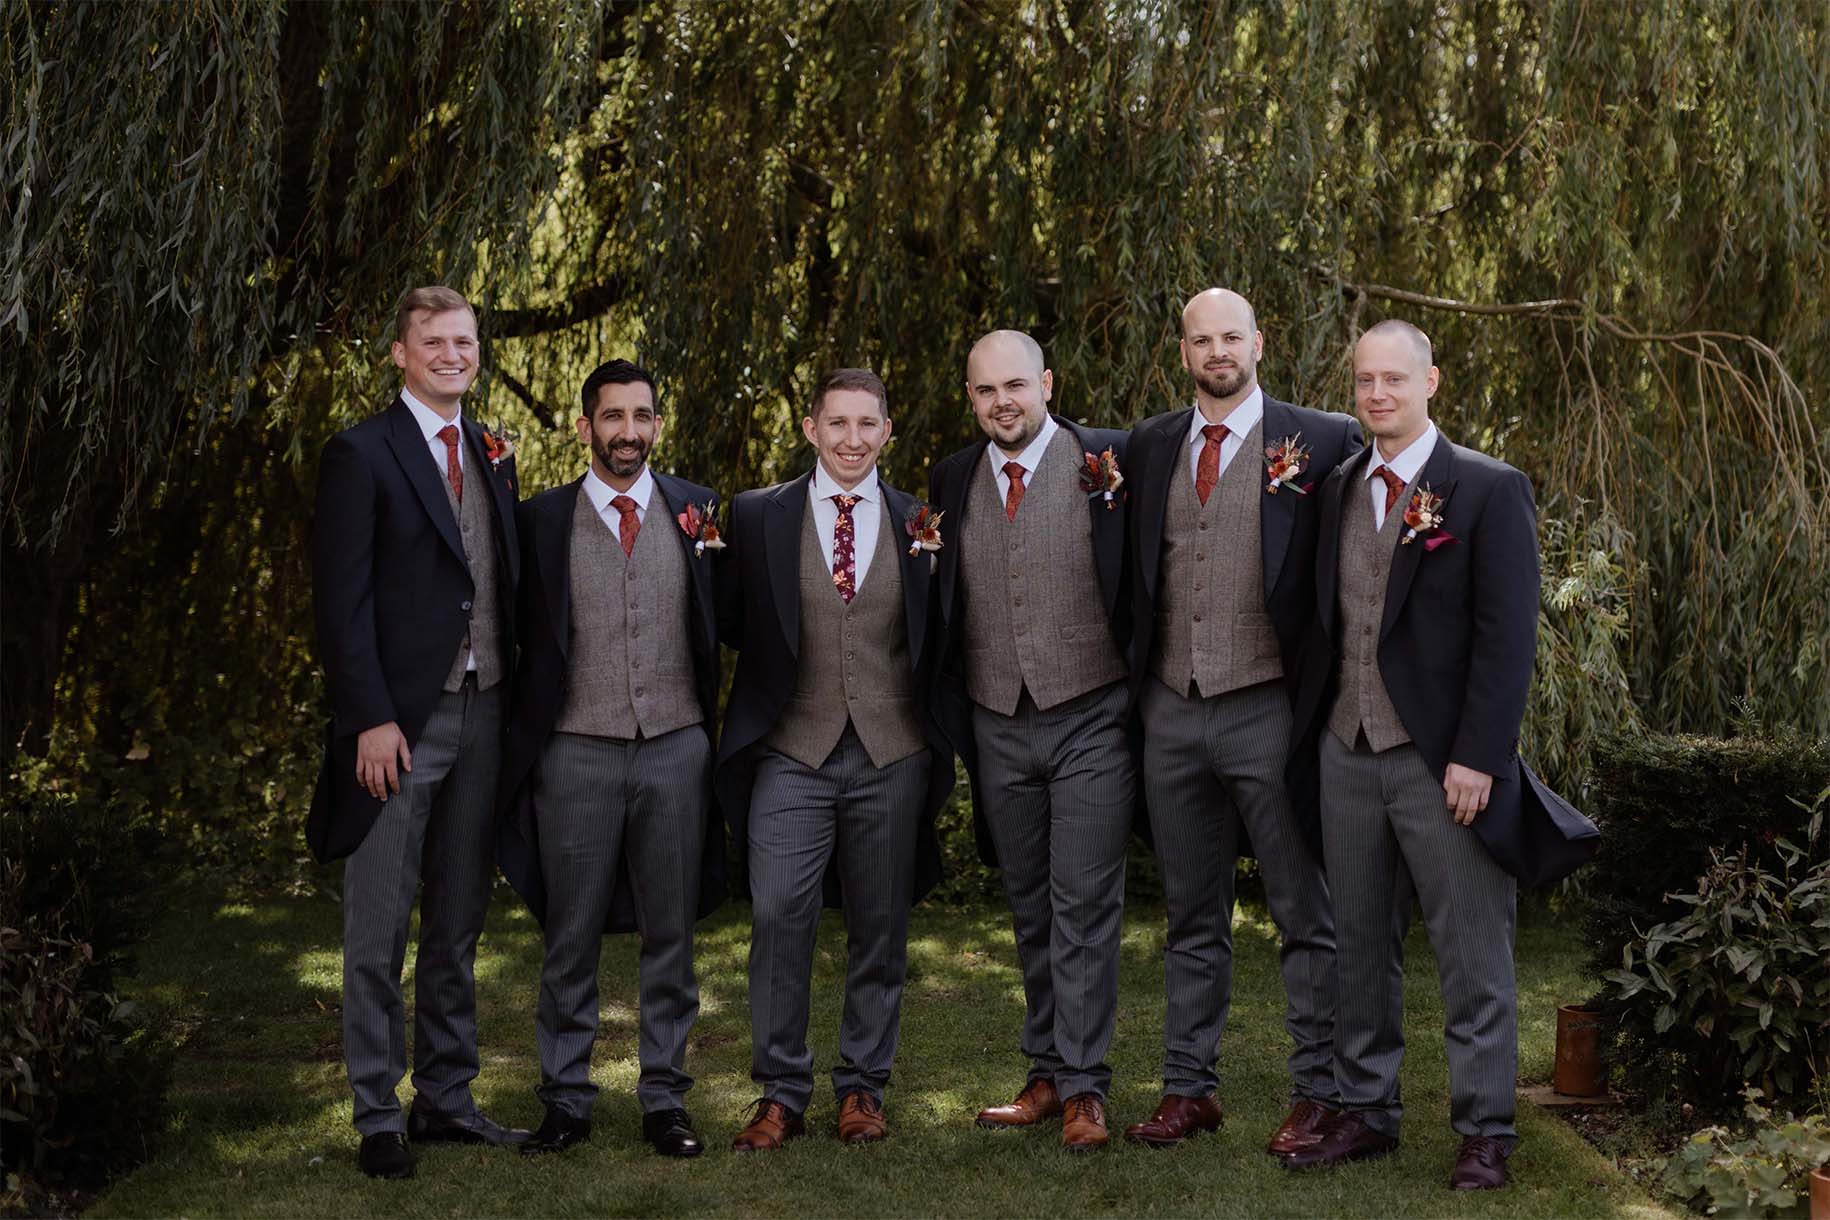 group photo groom and groomsmen Essex wedding